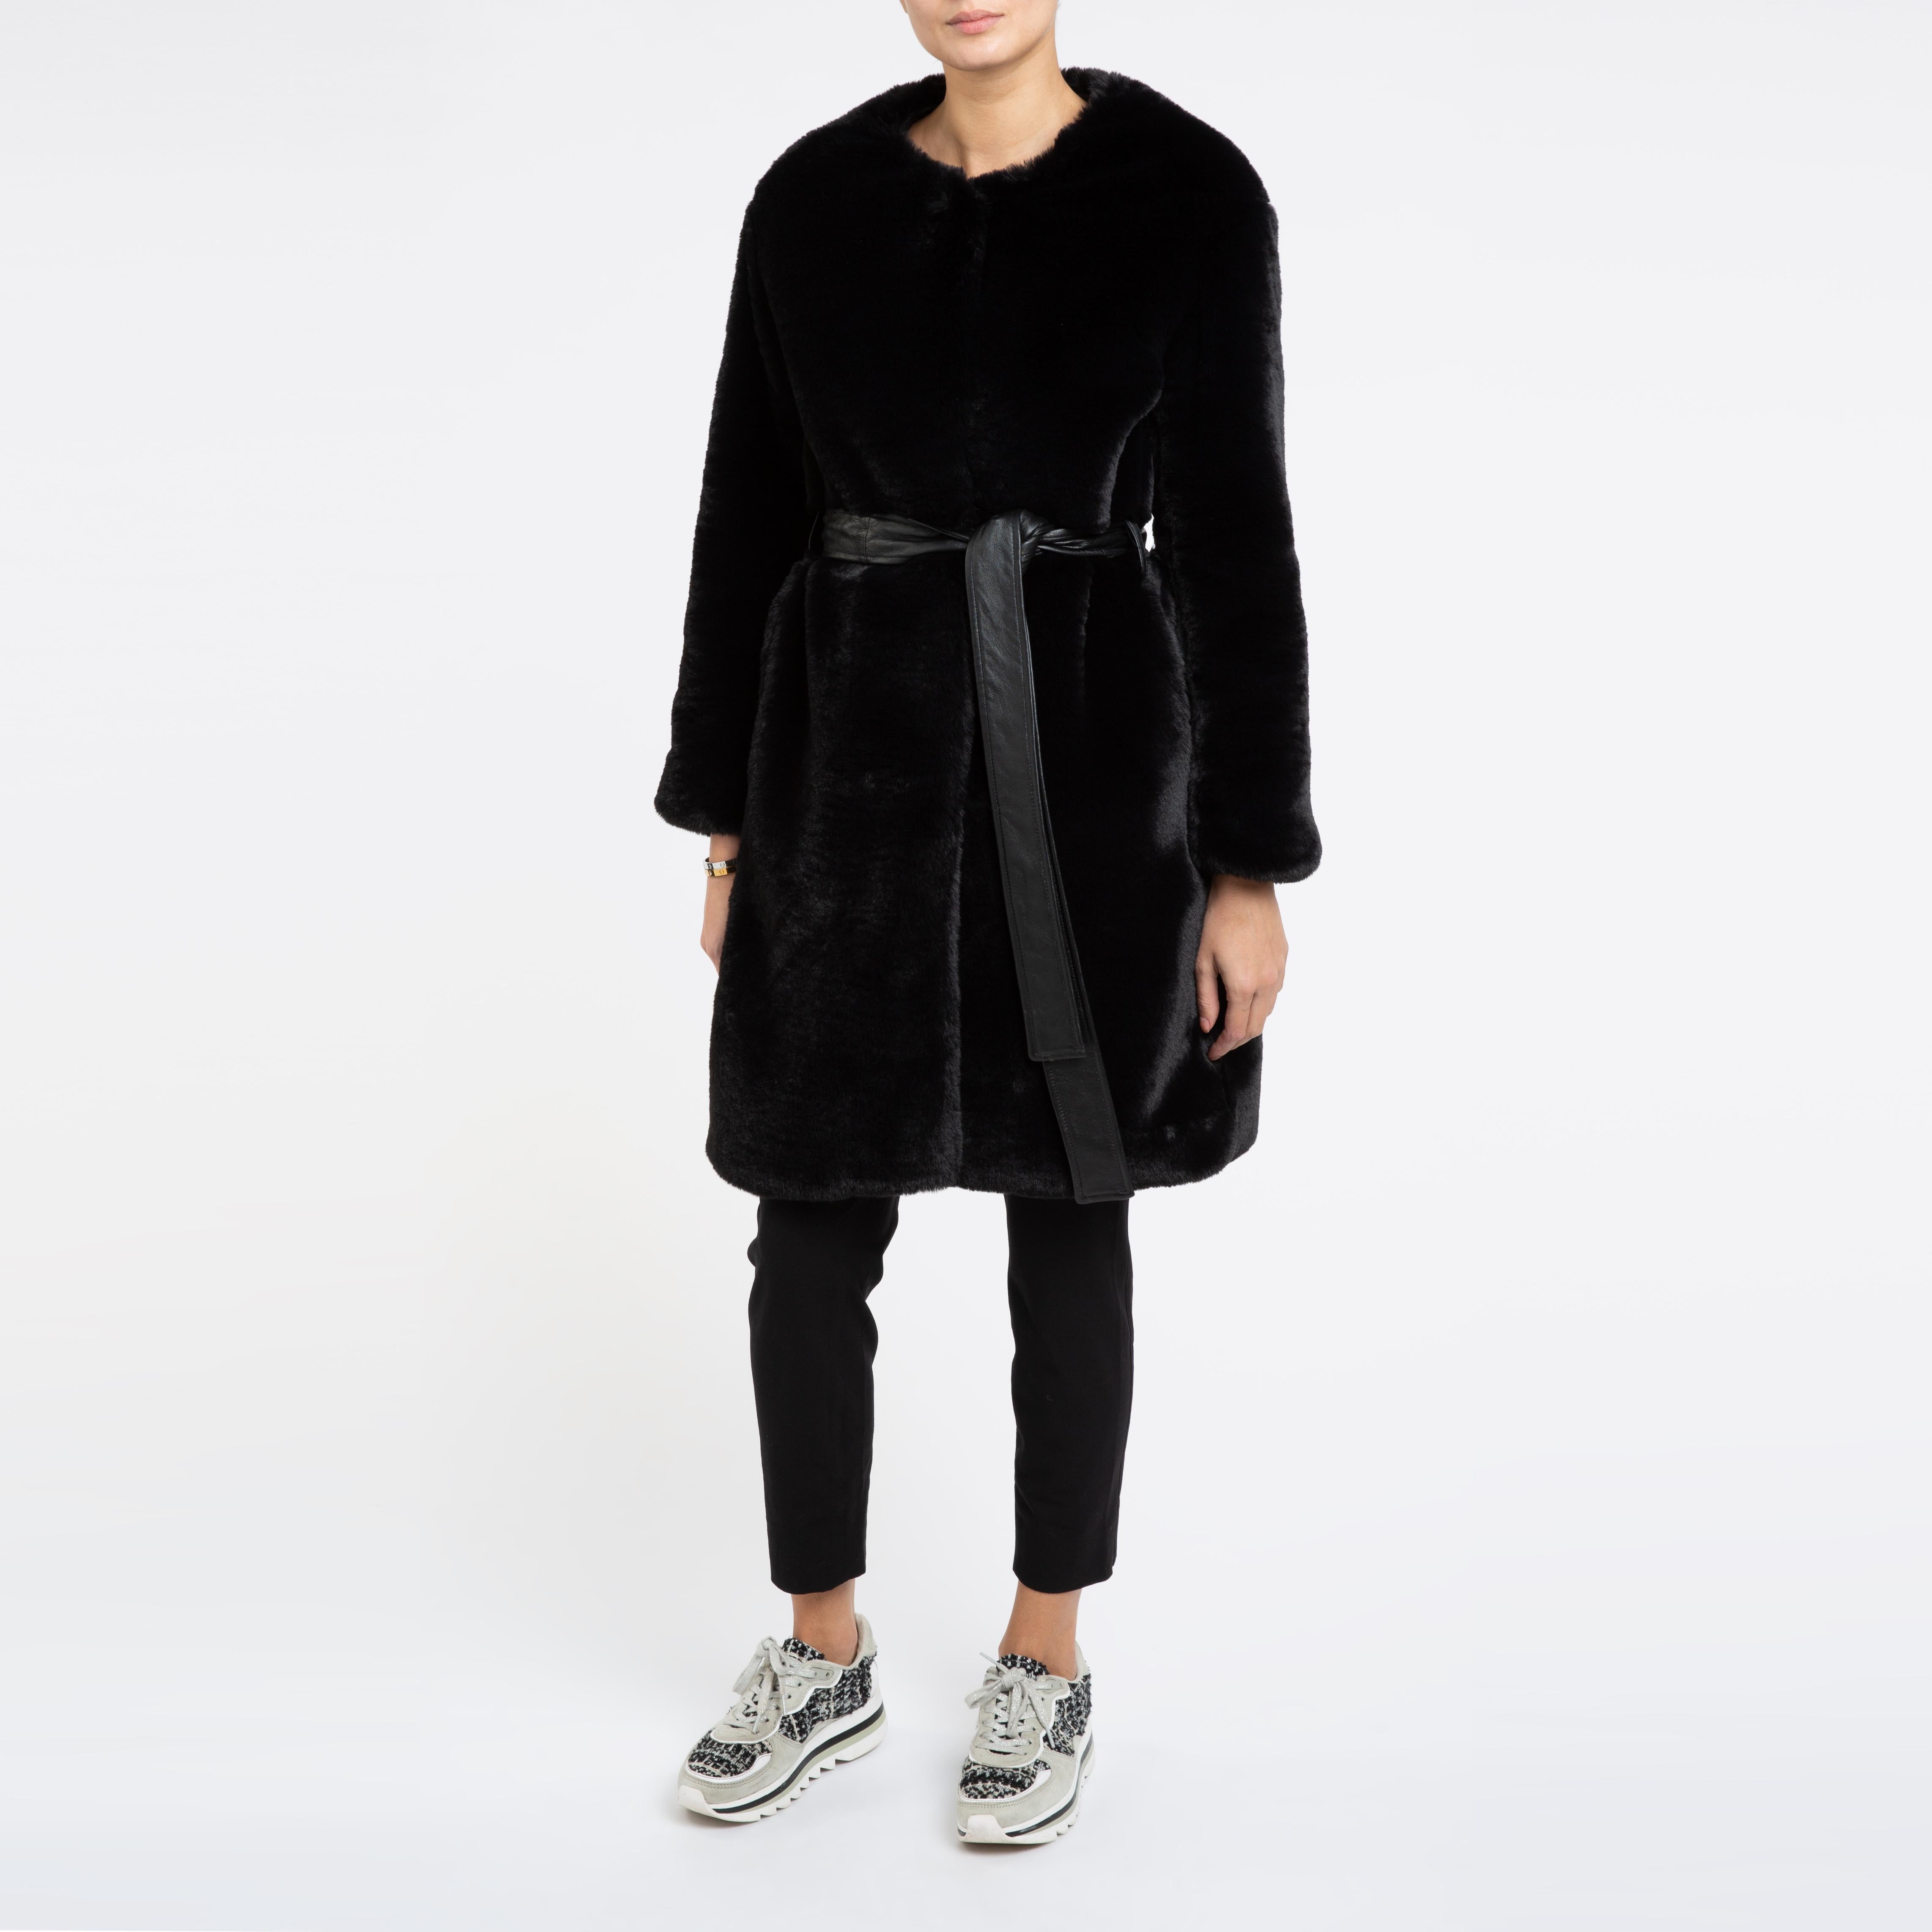 Verheyen London Serena  Collarless Faux Fur Coat in Black - Size uk 14  8